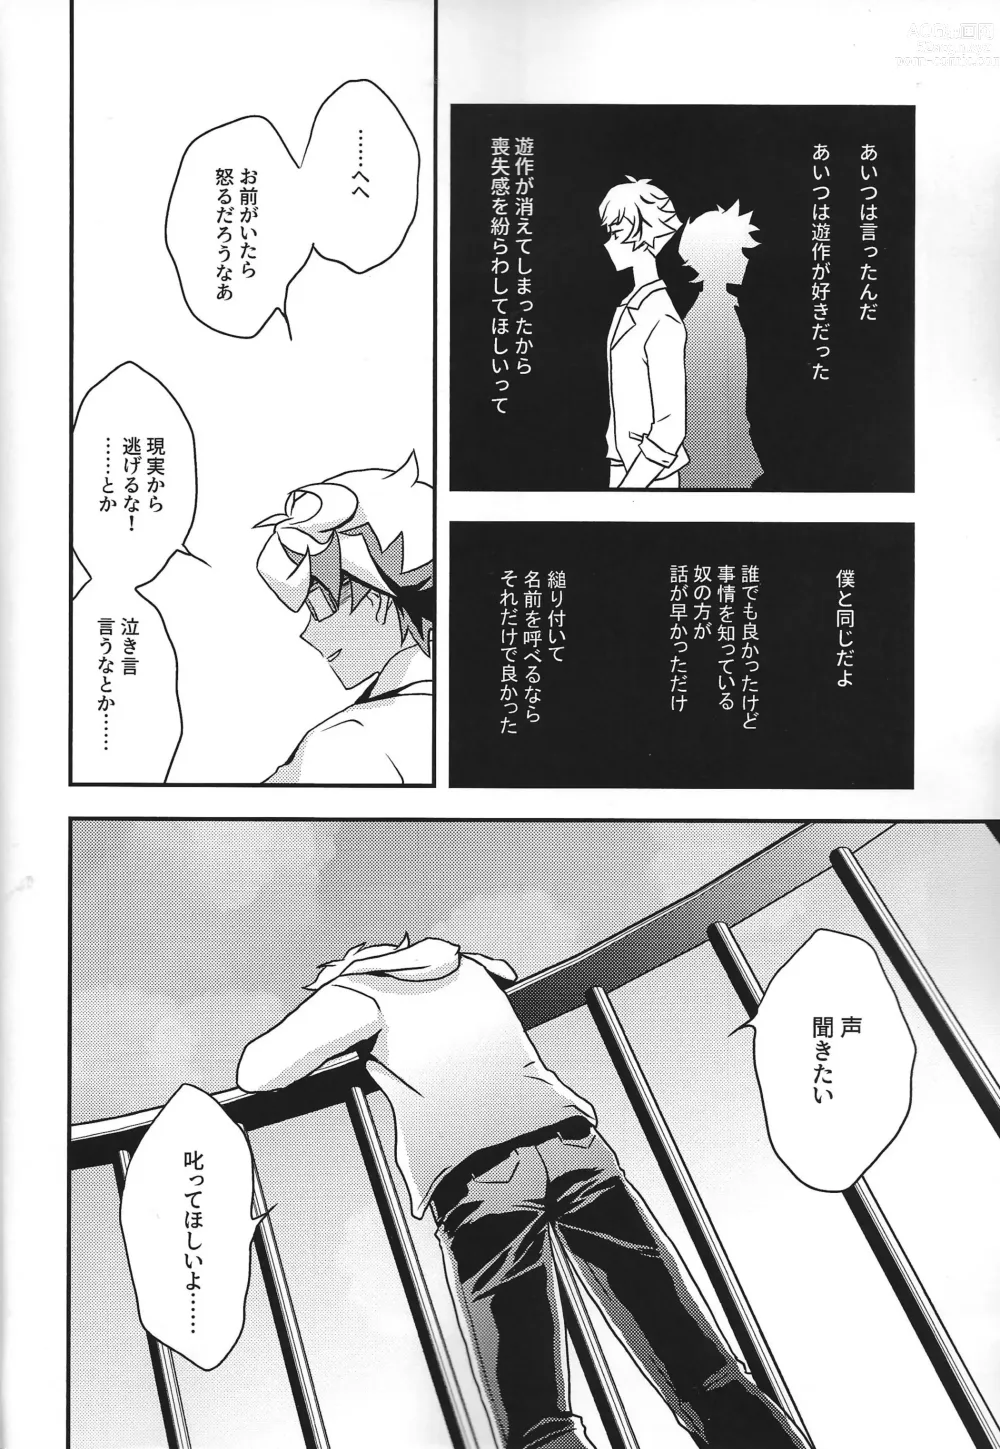 Page 13 of doujinshi Na o Yobu Koe